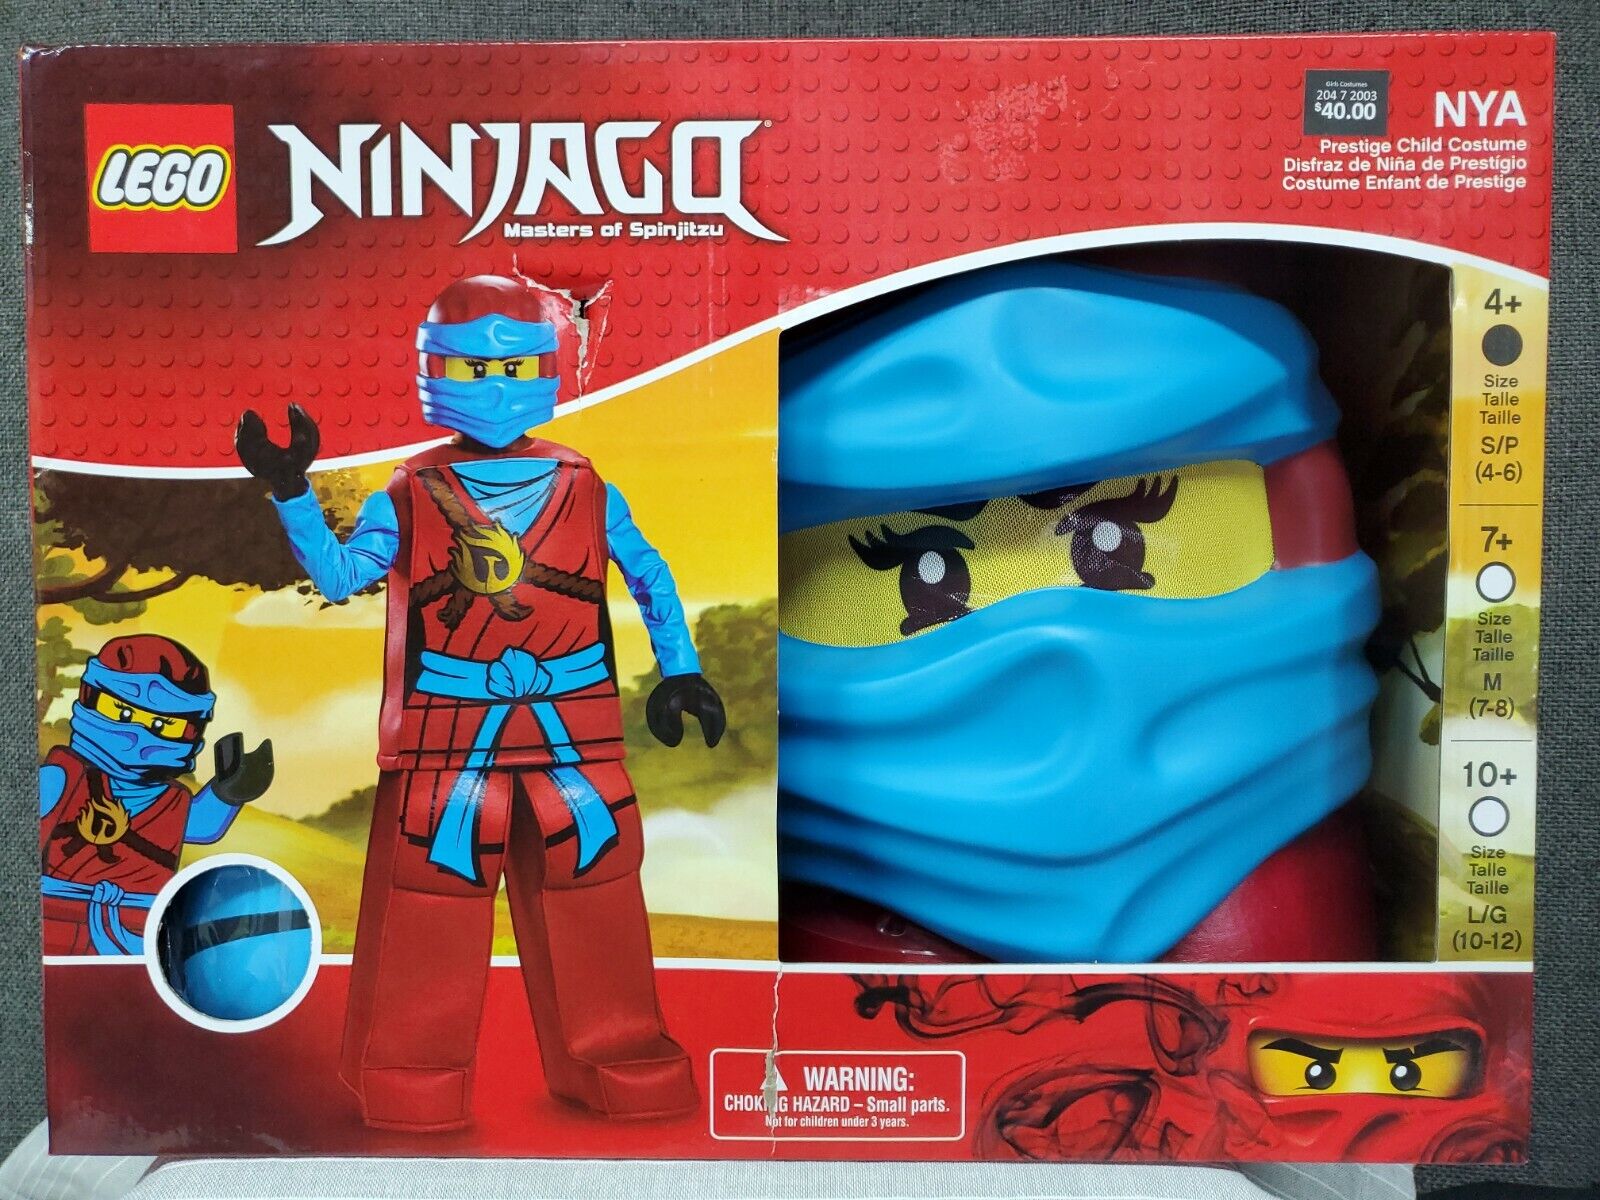 winter Cadeau Editor LEGO Ninjago NYA Prestige Costume~ Size Small (4-6)~ NEW Sealed Box! - BND  Treasure Chest